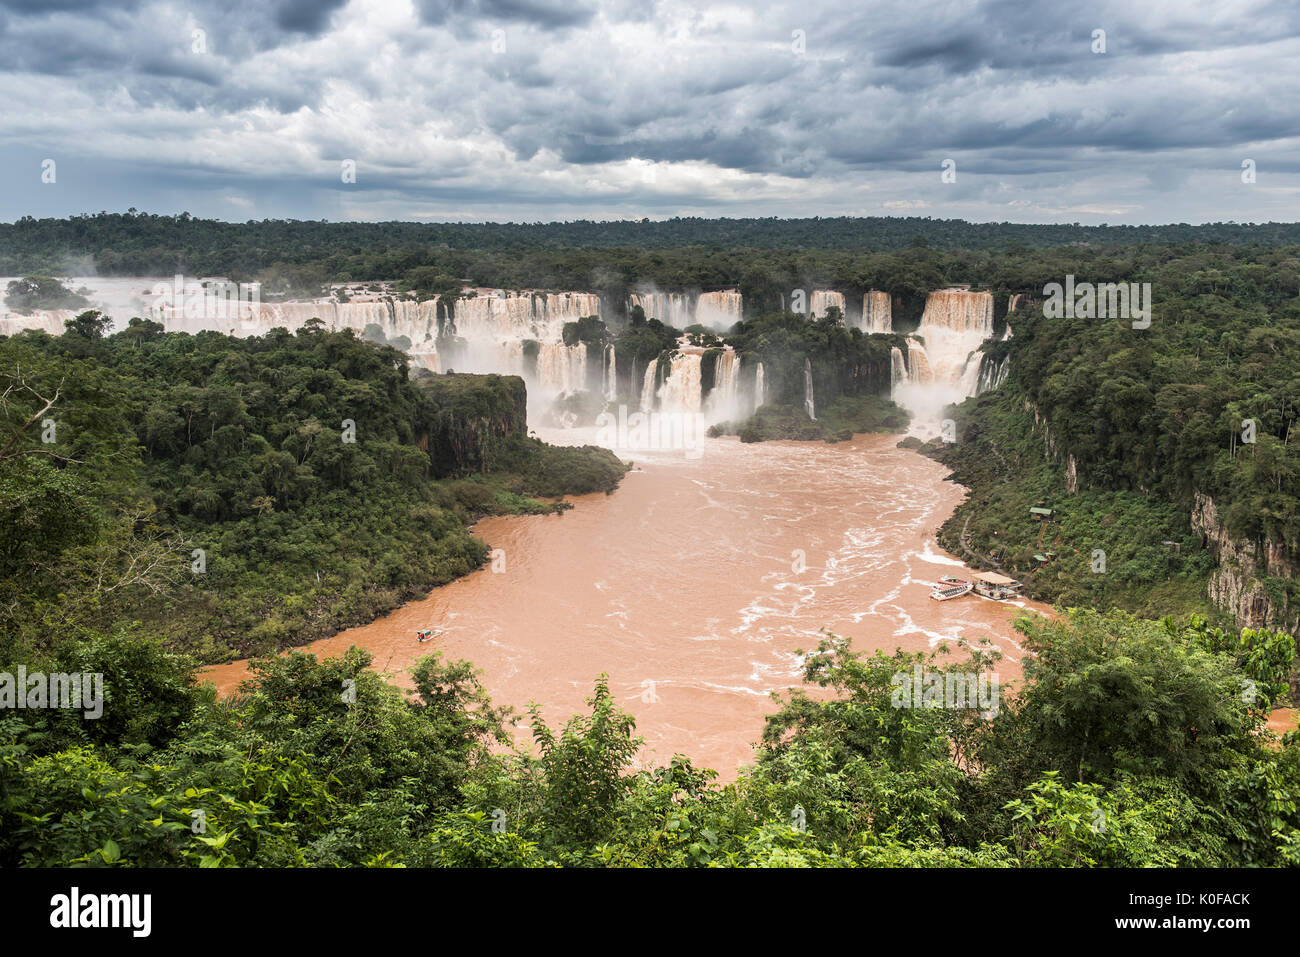 Cascate di Iguazú del fiume Iguazú, fiume di confine tra Brasile e Argentina, Paraná, Brasile Foto Stock